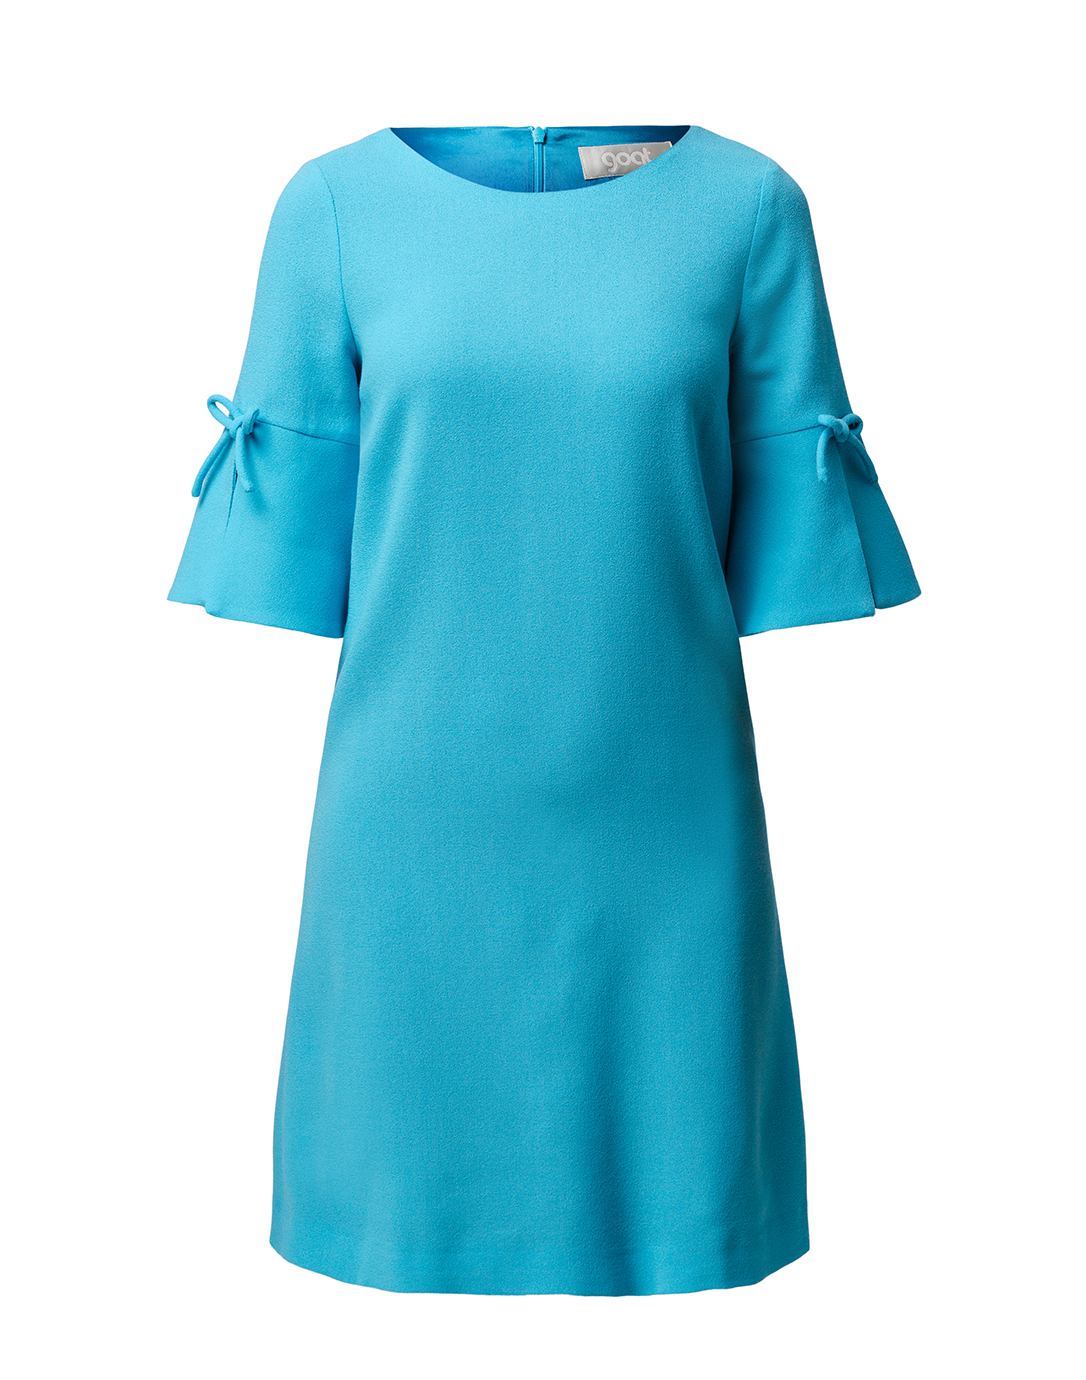 turquoise tunic dress